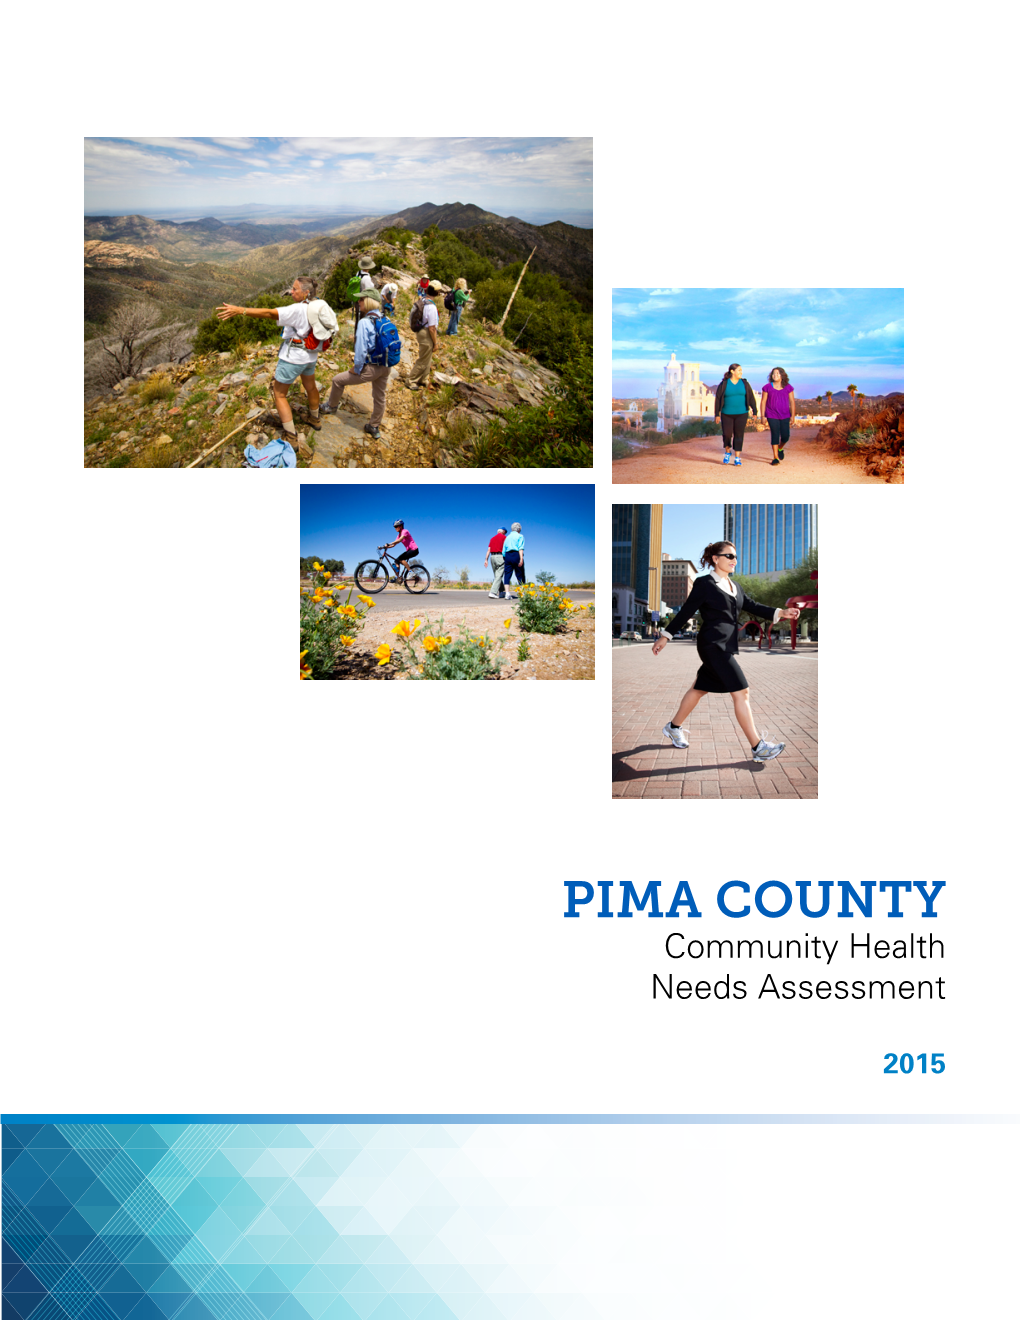 Pima County Community Health Needs Assessment 2015